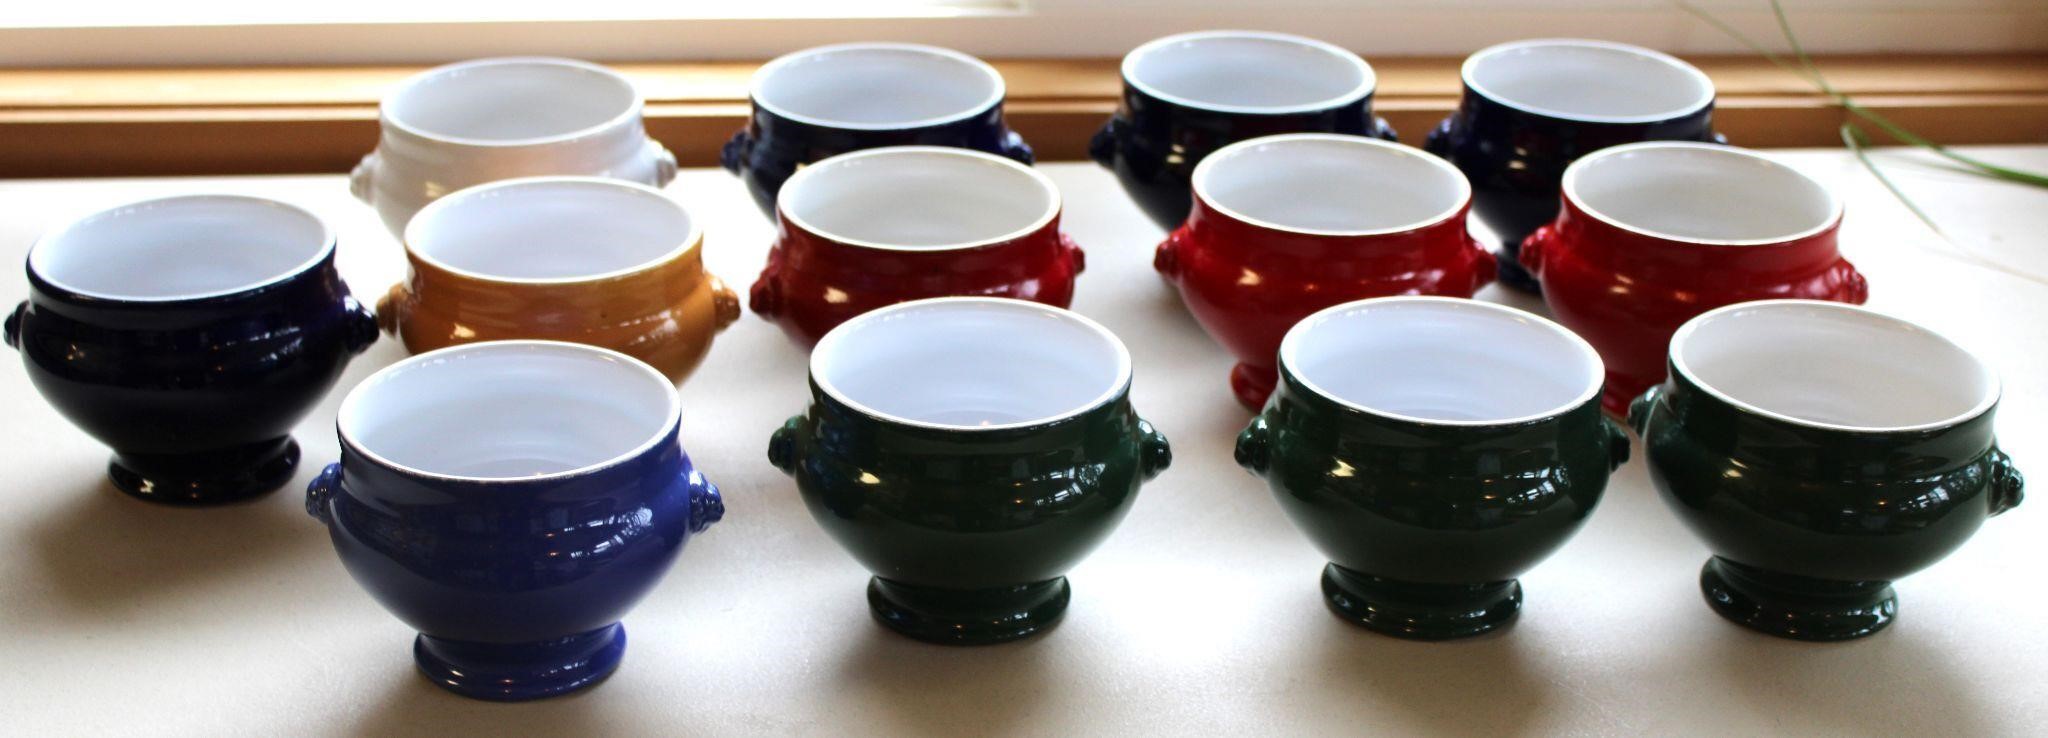 Smile Henry Pottery Bowls